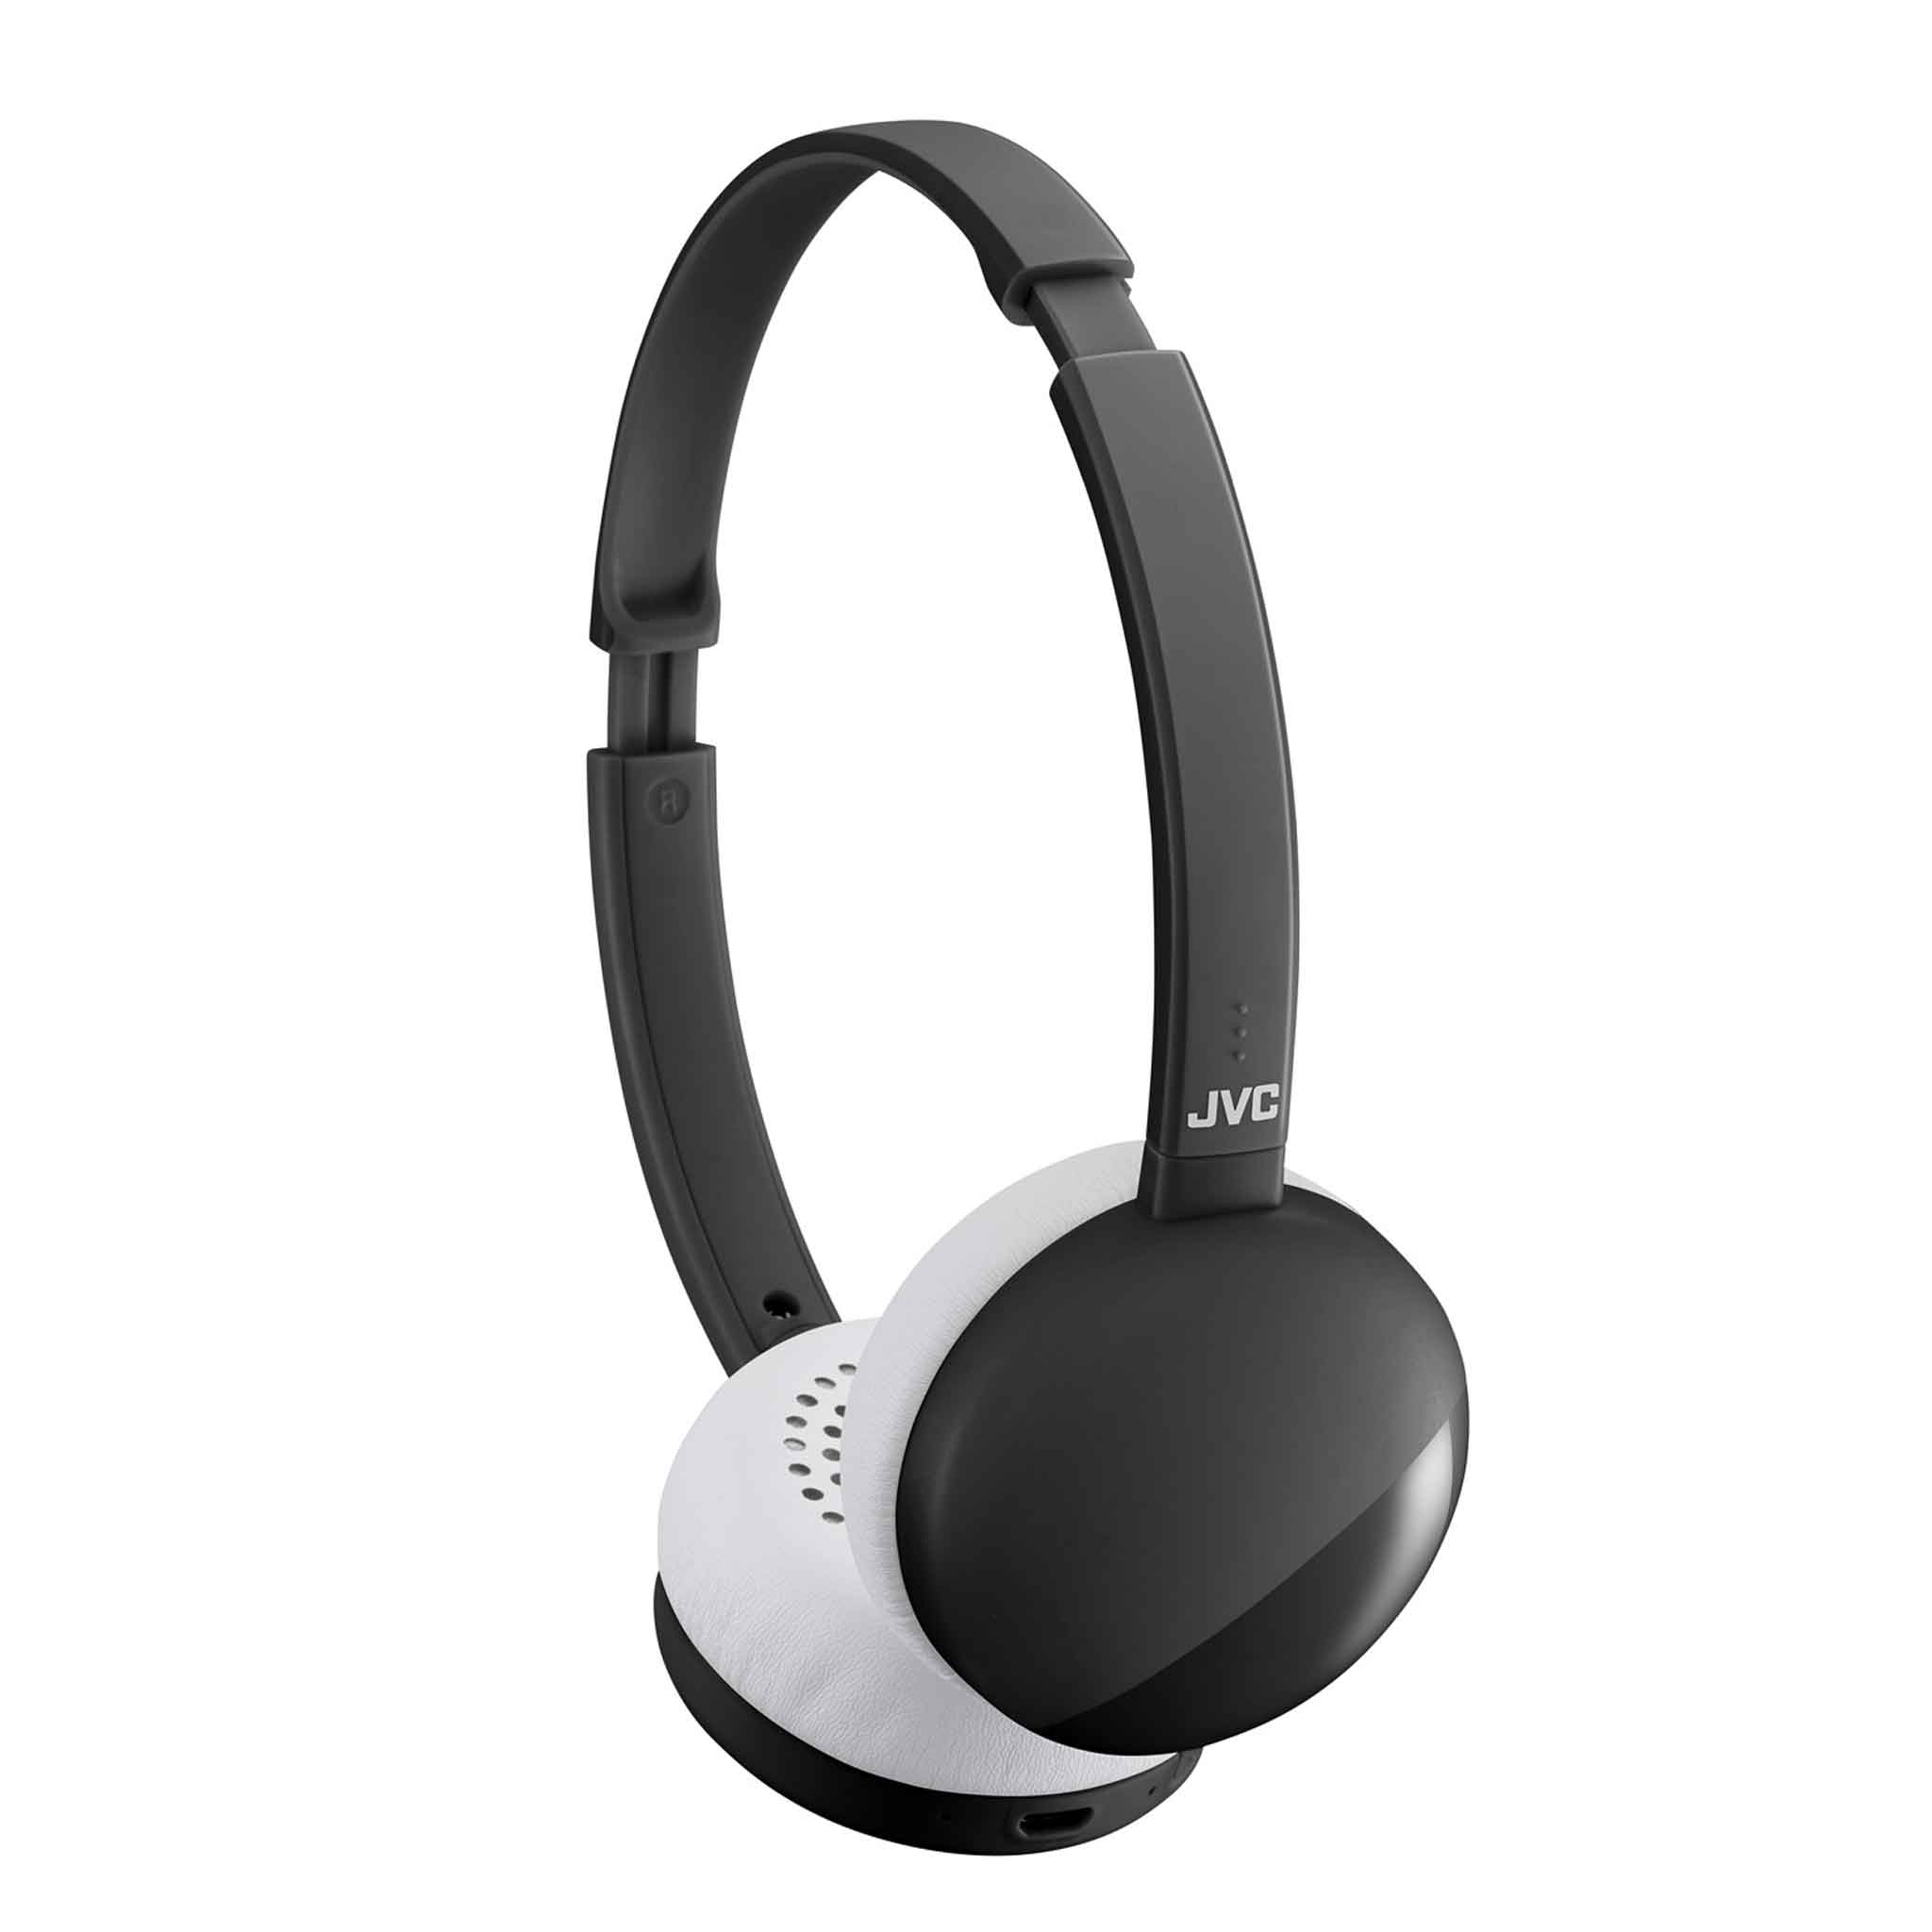 JVC HA-S22W in Black Bluetooth Headphones